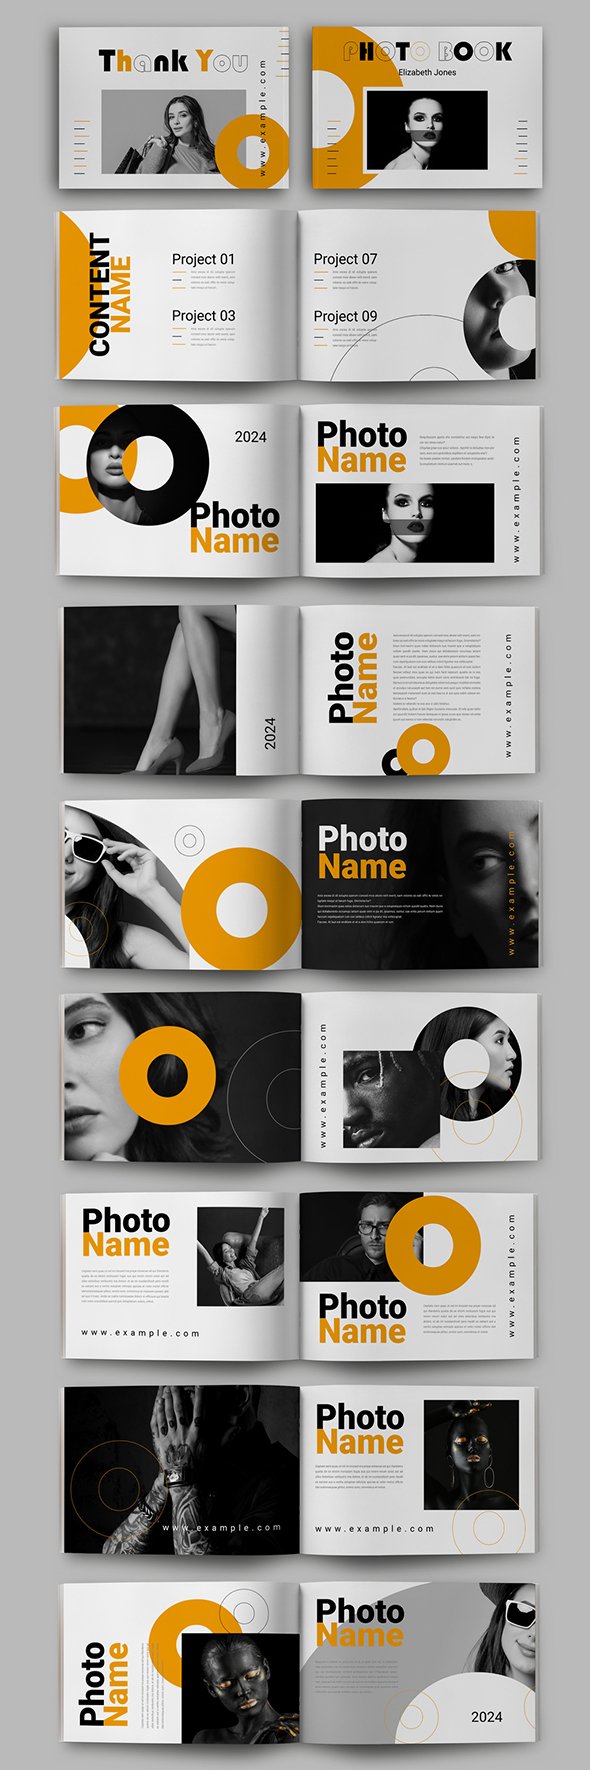 AdobeStock - Photo Book Design - 739429816